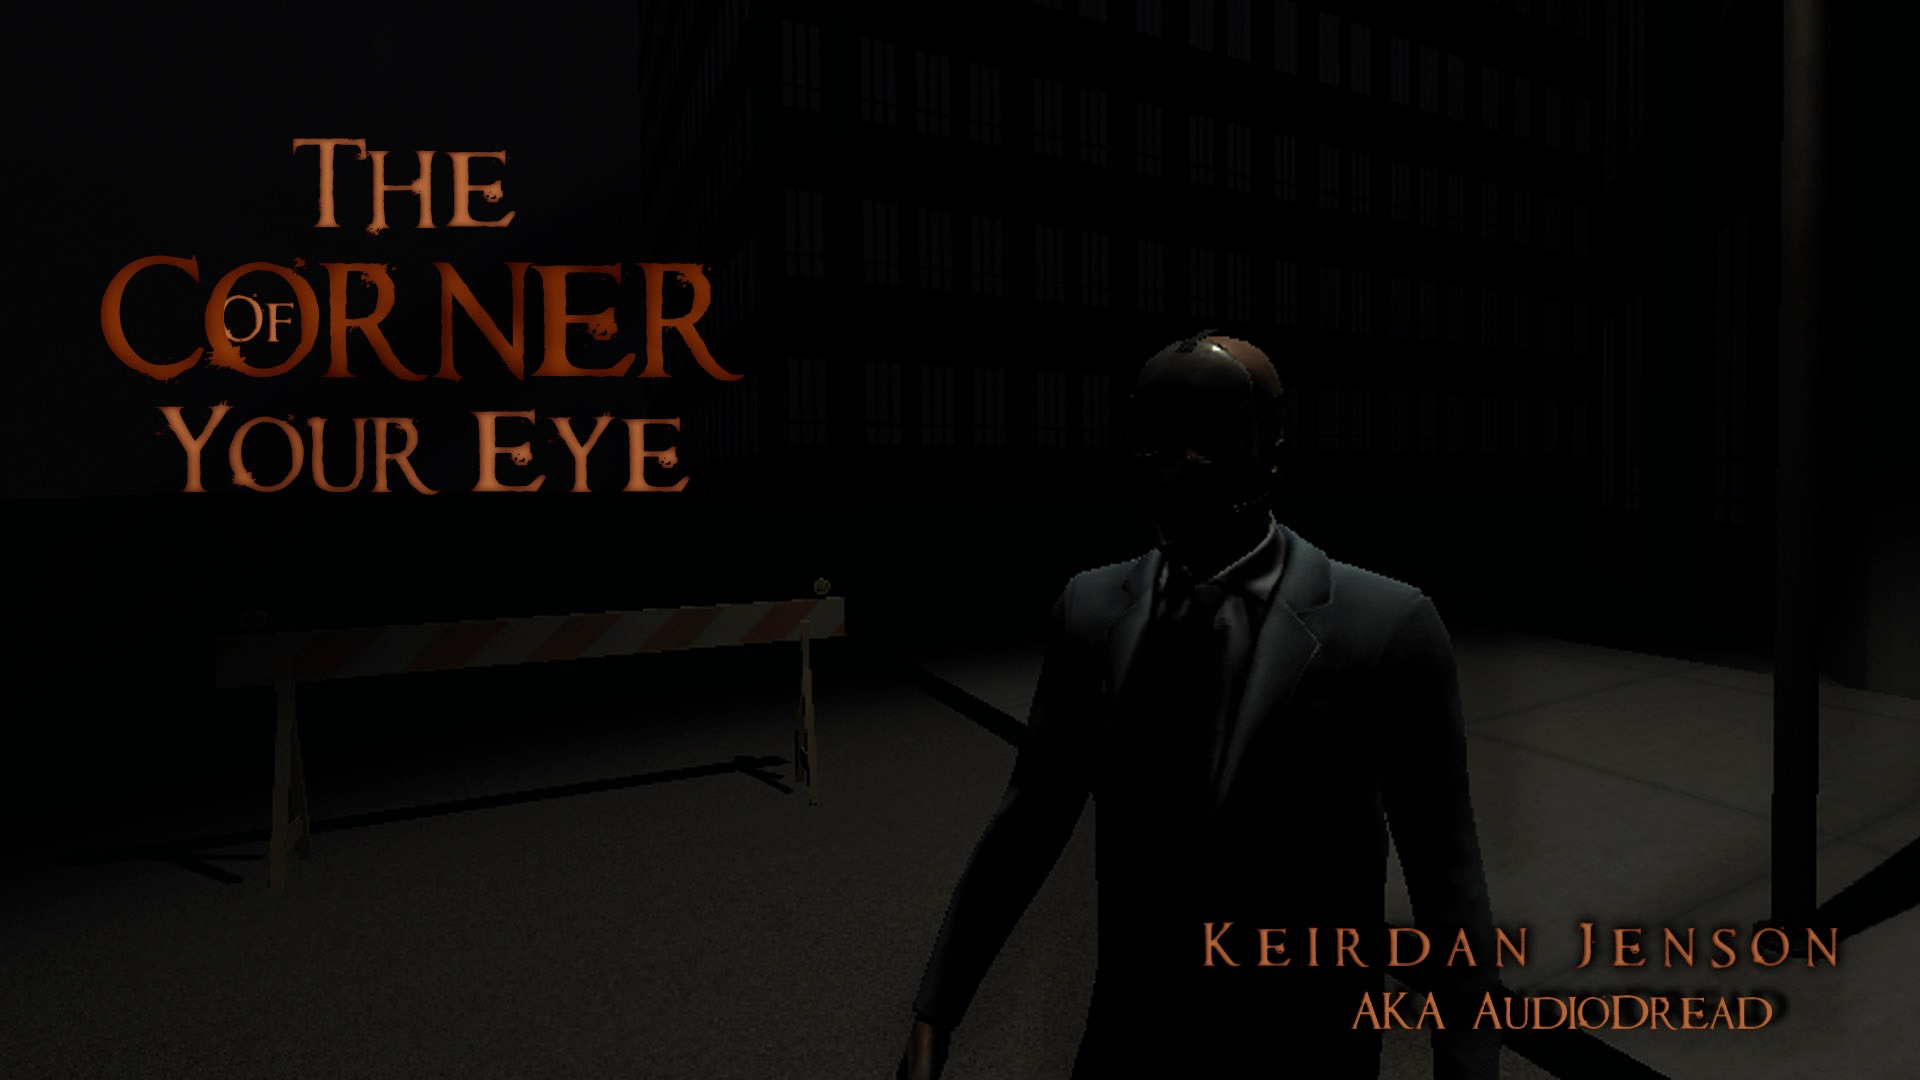 The Corner of Your Eye